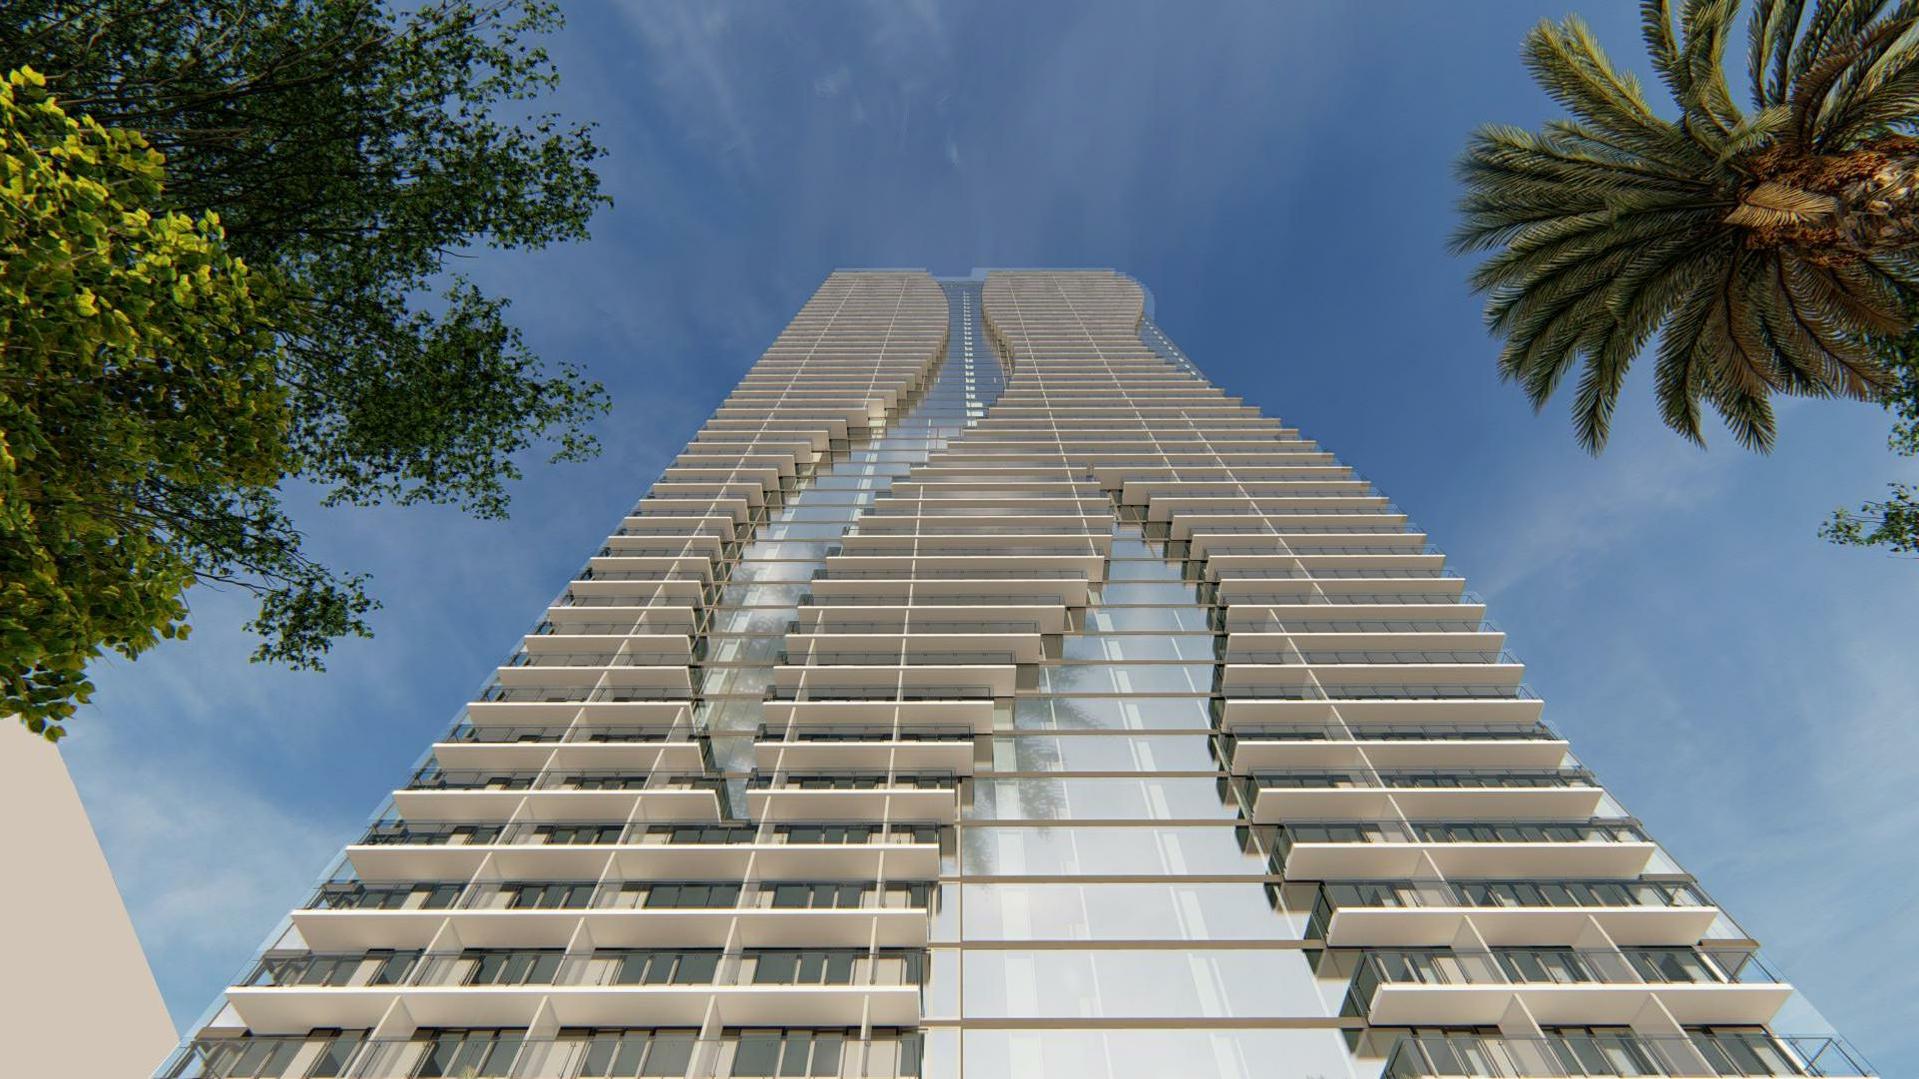 Miami World Tower. Designed by NBWW Architects.